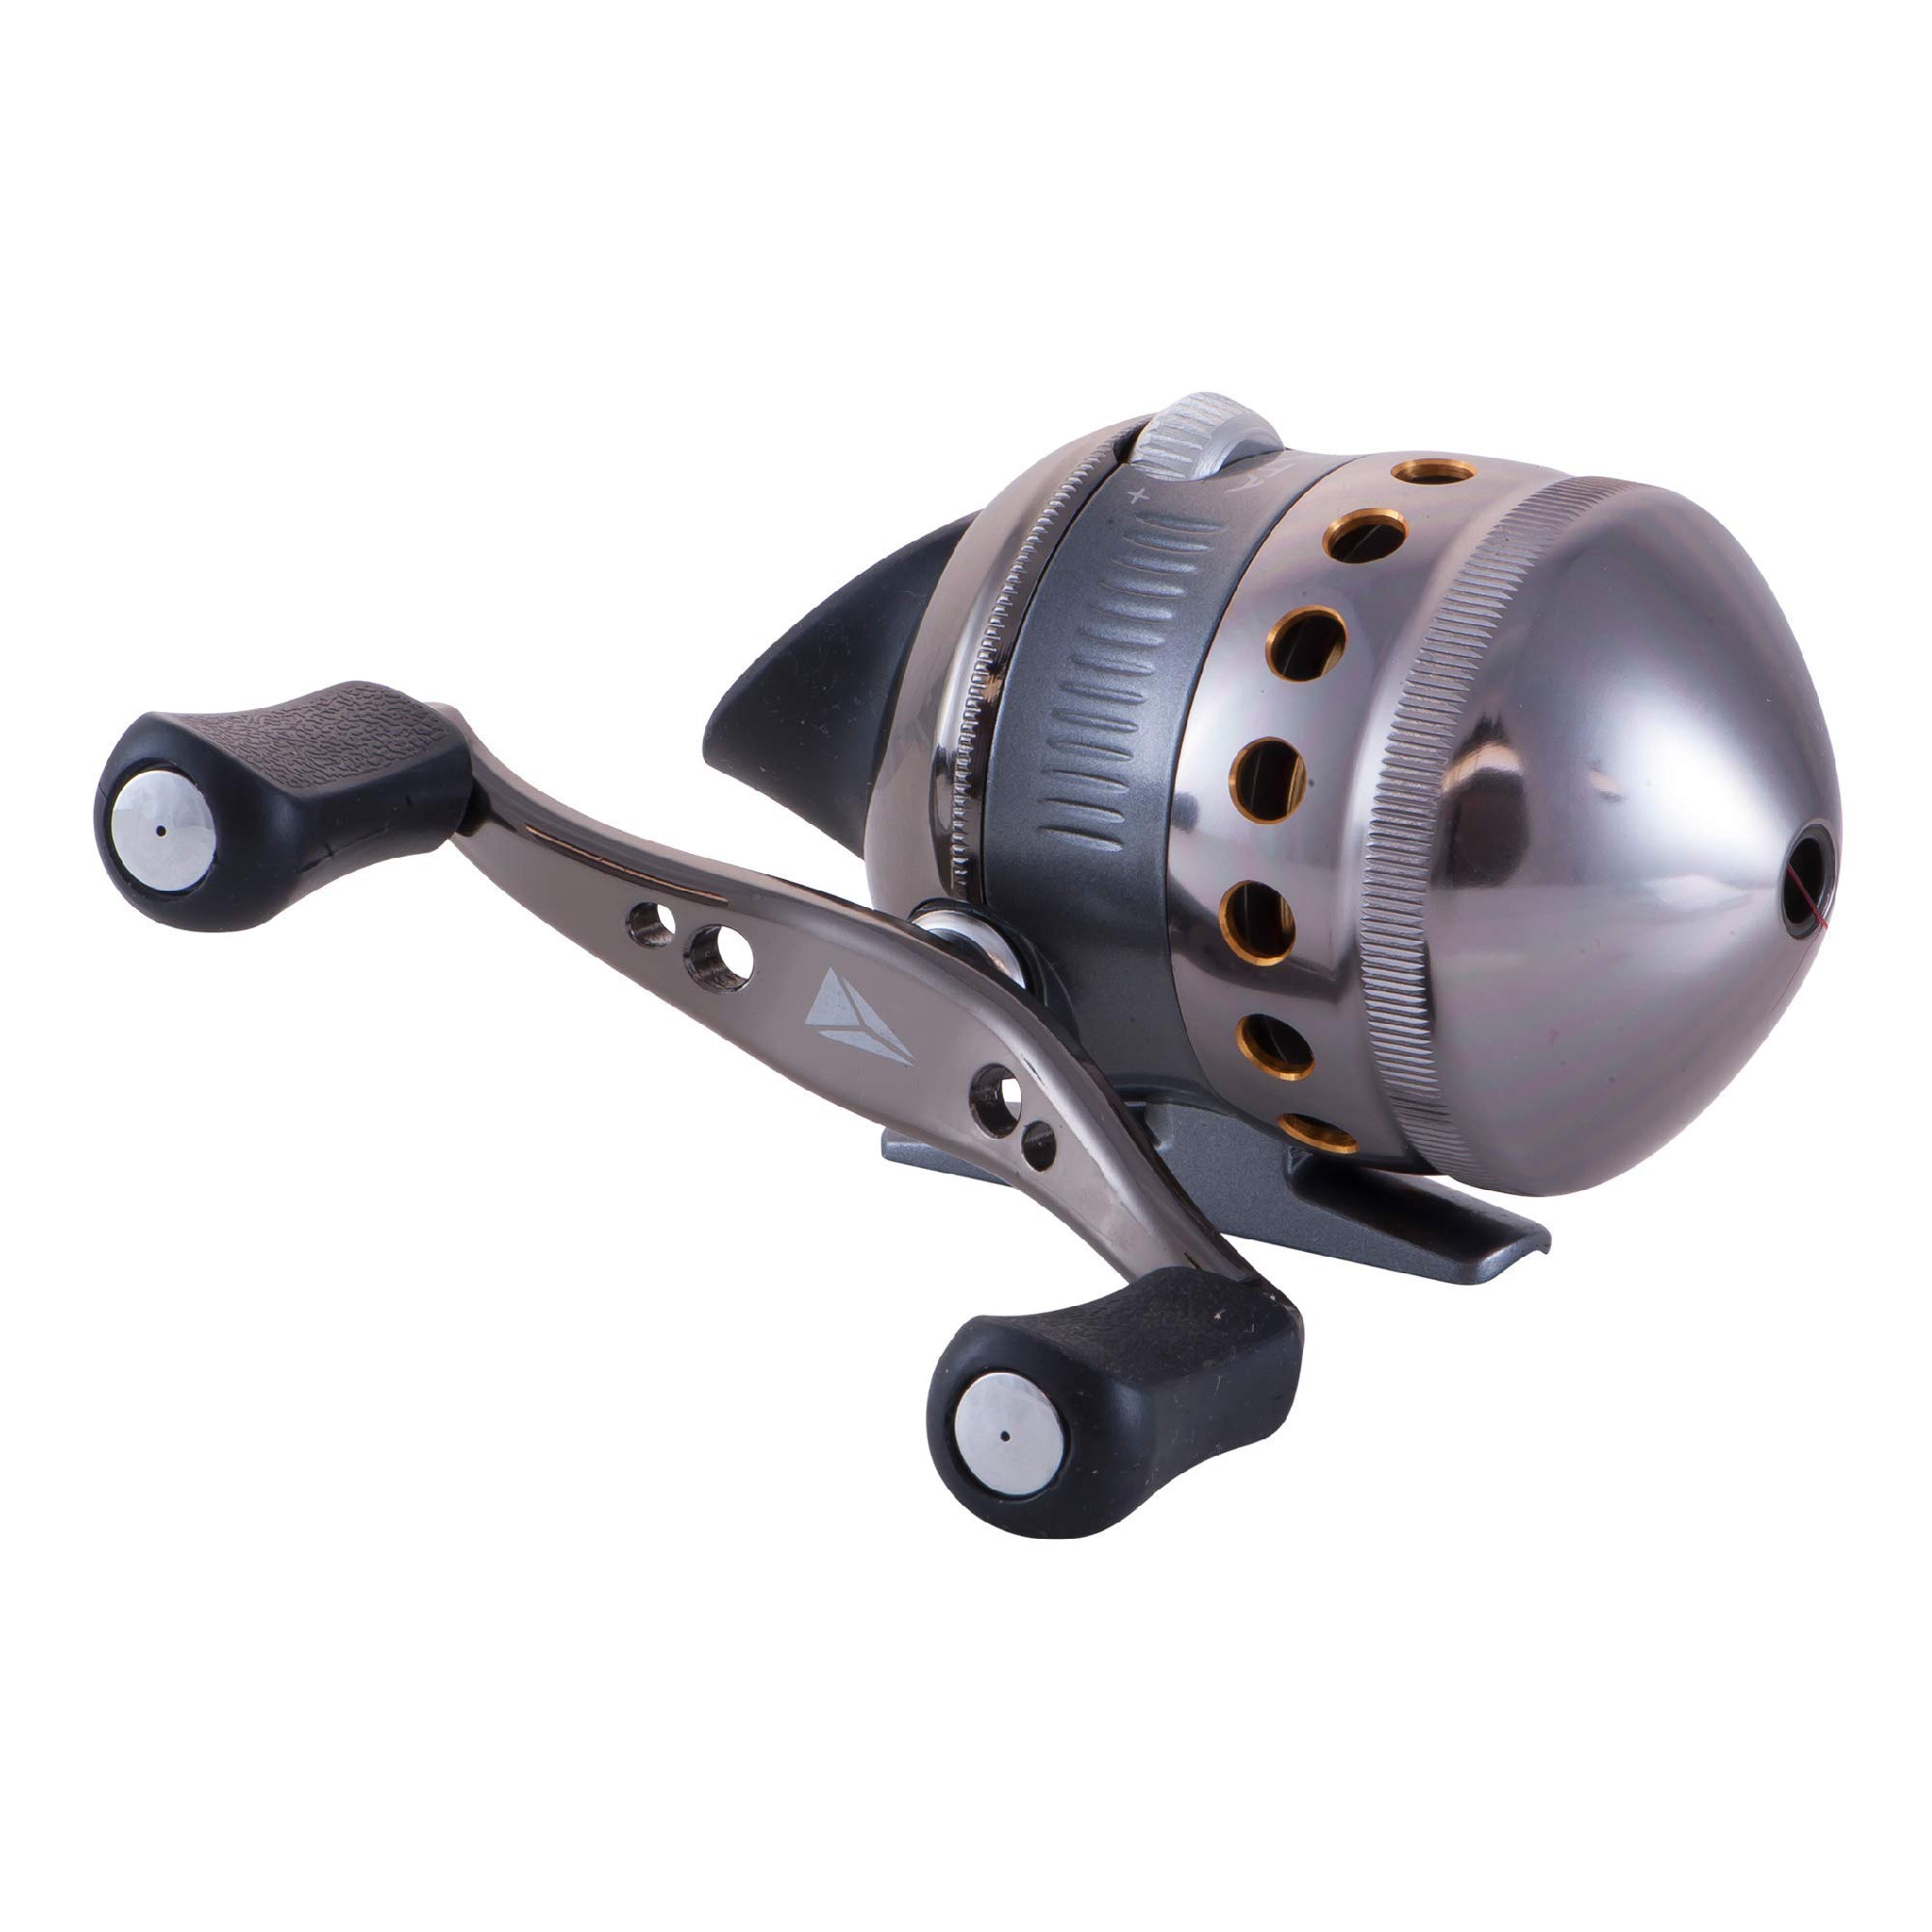 Zebco Omega Pro 3 Spincast Fishing Reel